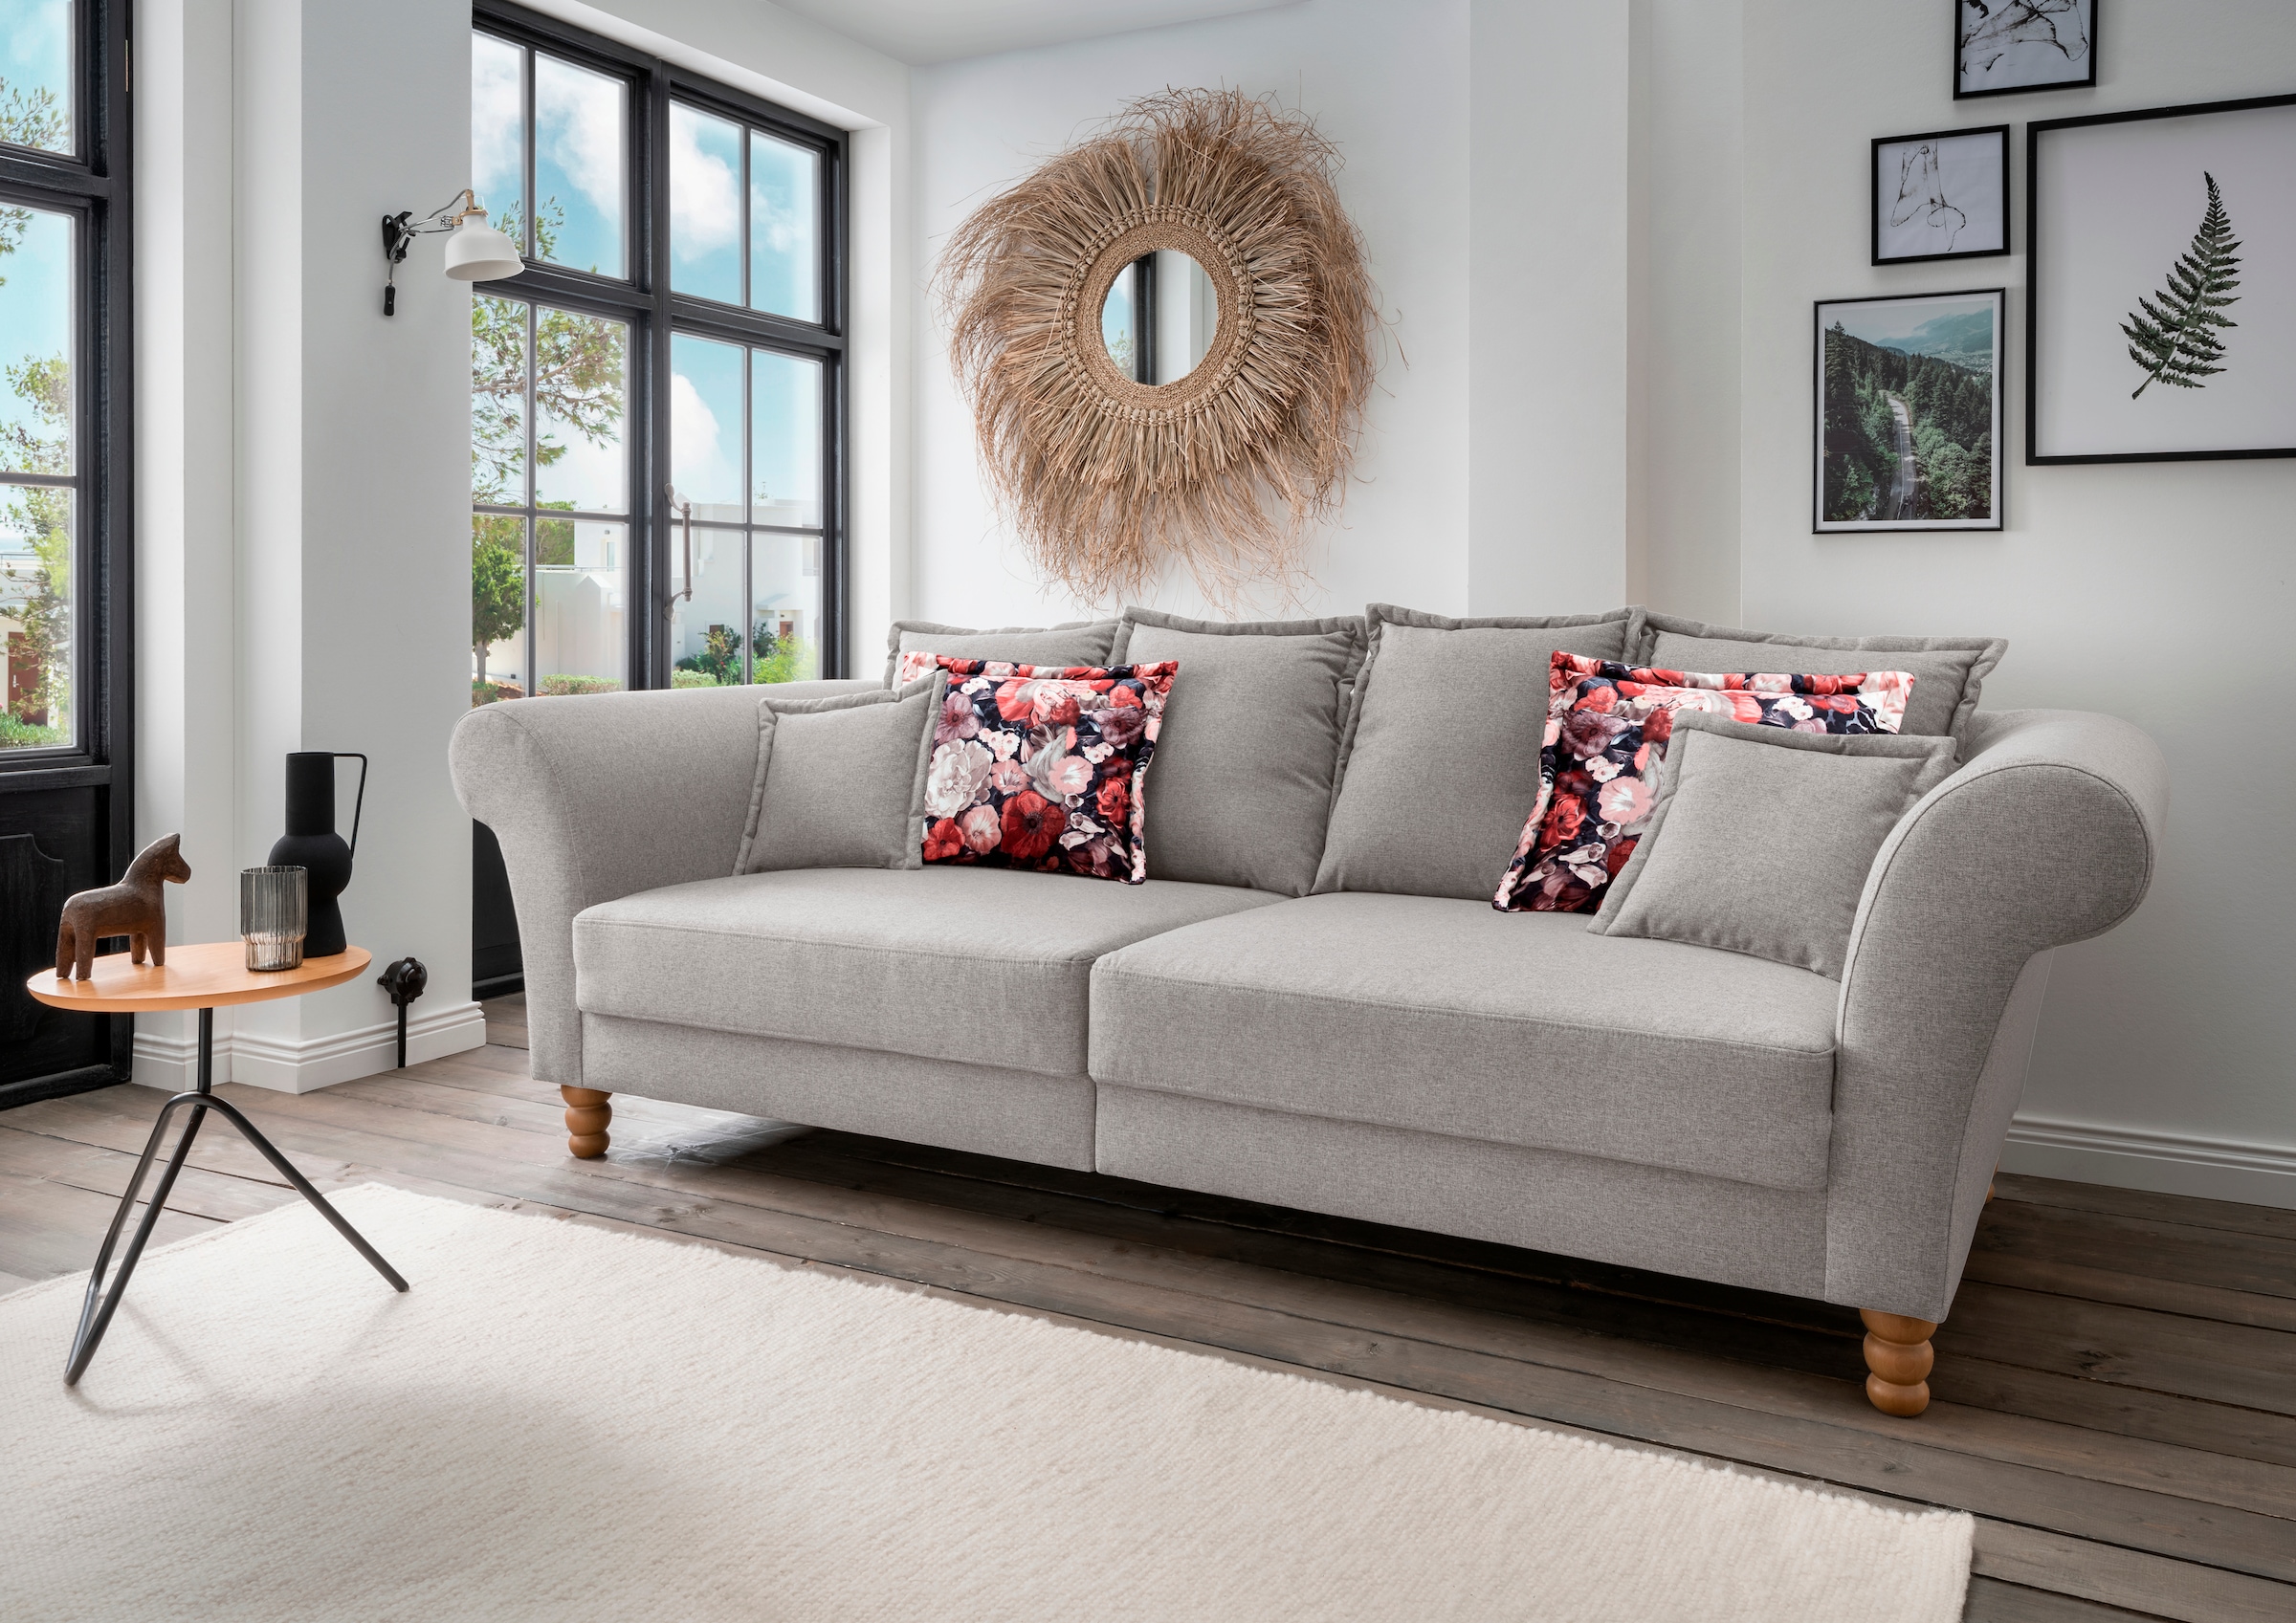 Home affaire Big-Sofa »Tassilo« kaufen bei OTTO